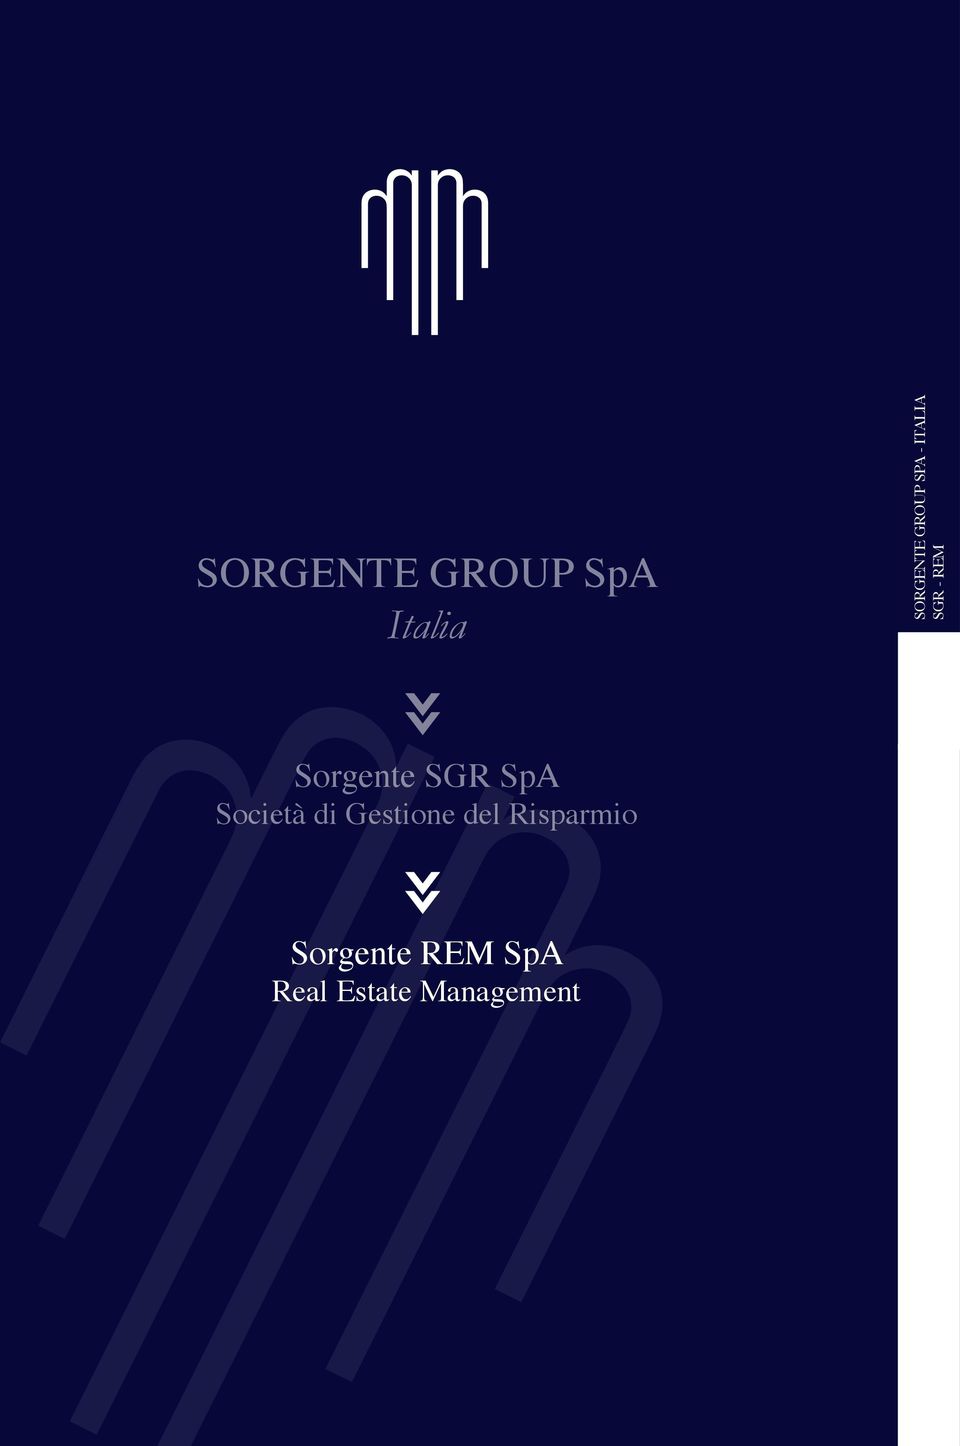 Risparmio Sorgente REM SpA Real Estate Management 28 Sorgente